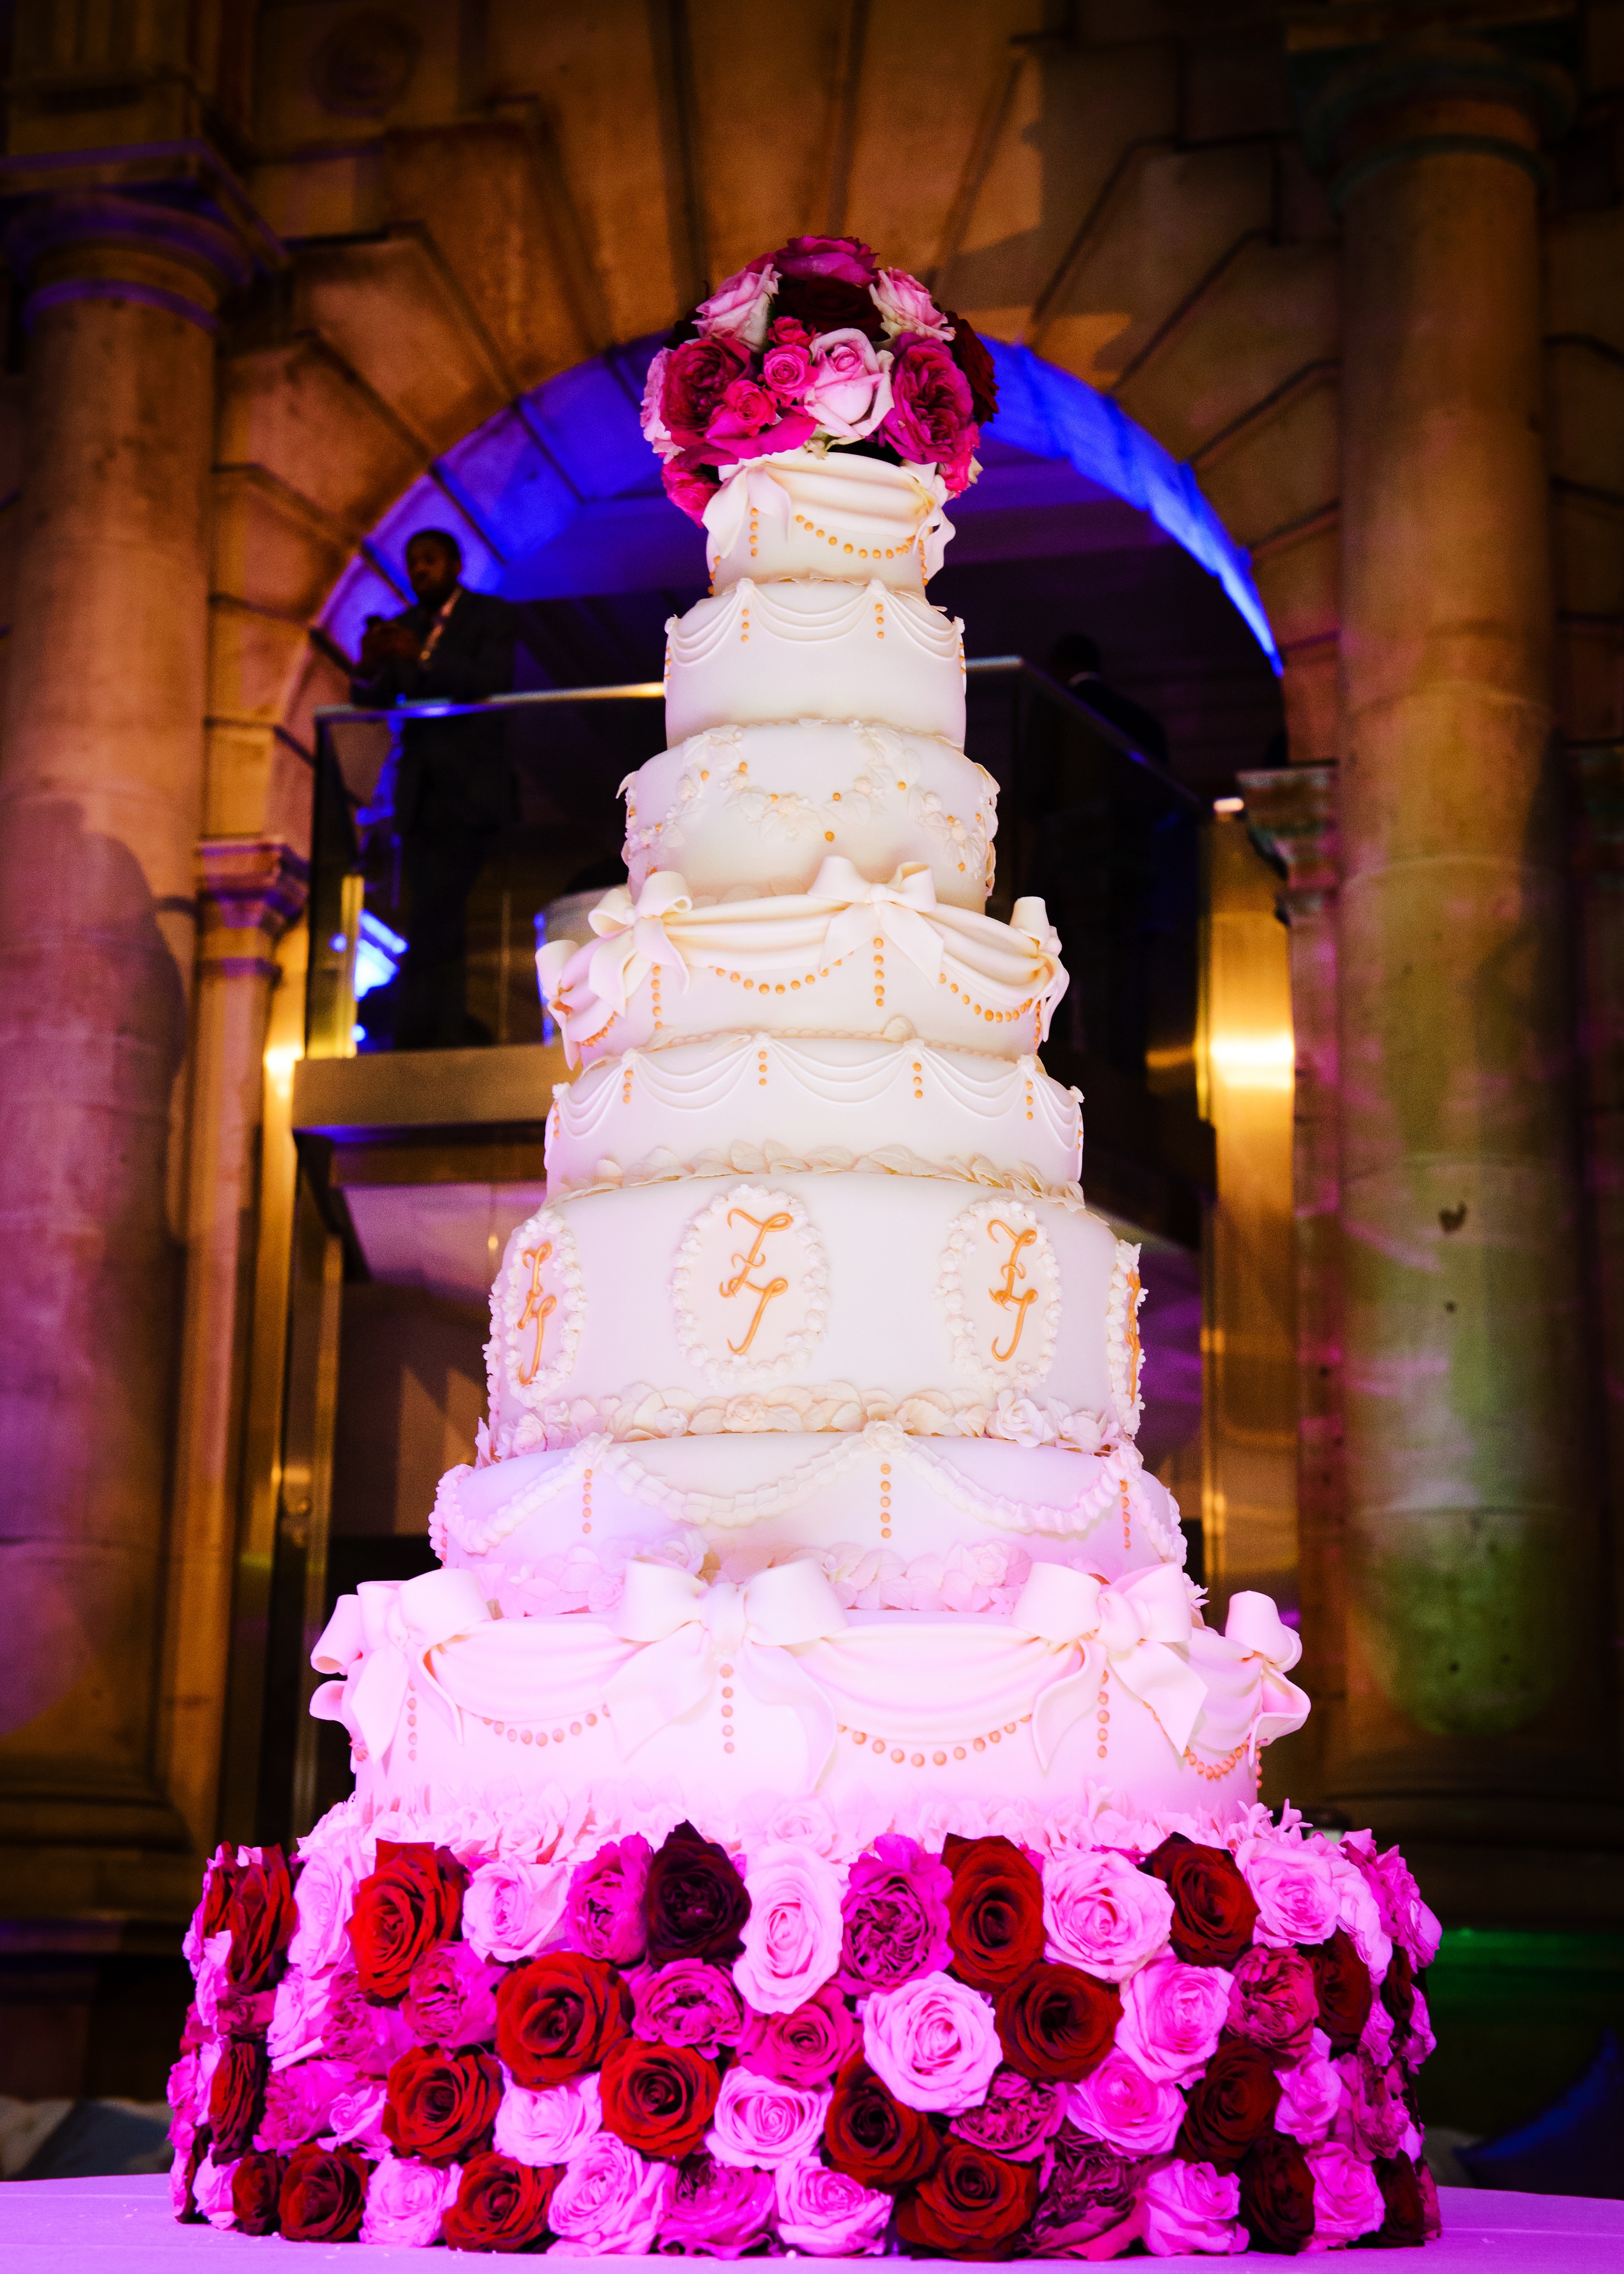 Cake Grandeur at the Royal Exchange, London